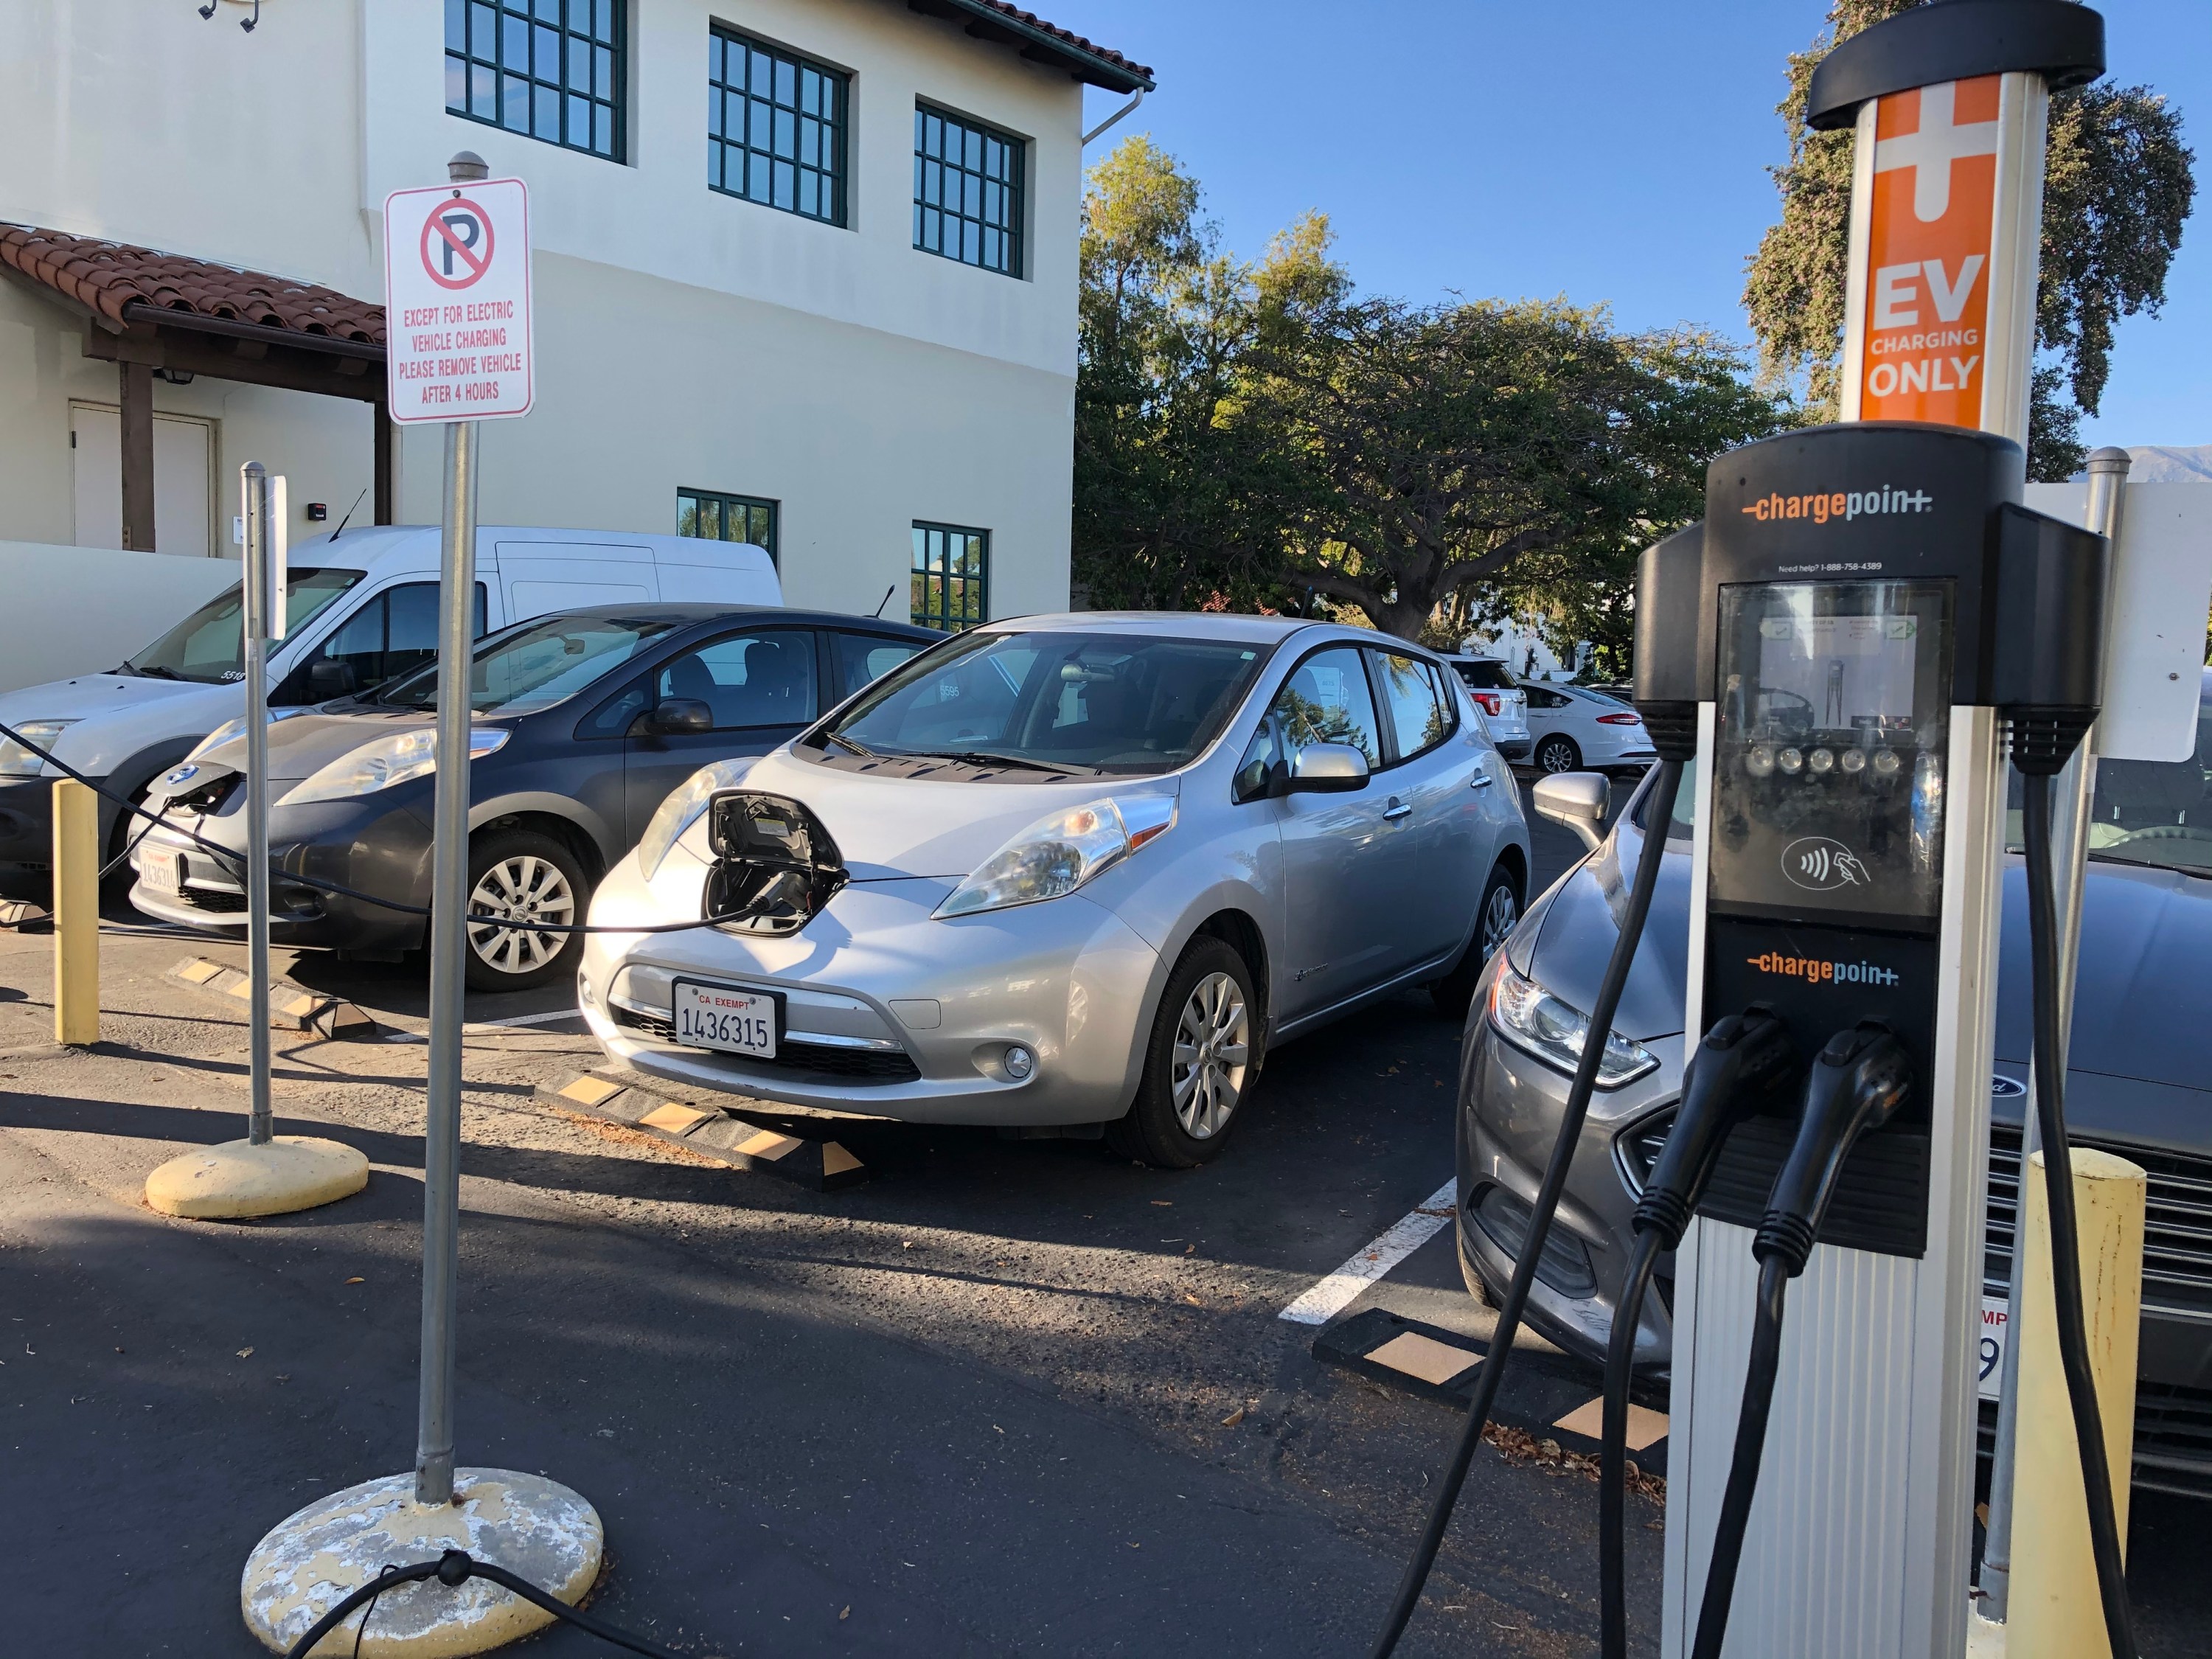 Santa Barbara County Establishes Electric Vehicle Charging Fees The